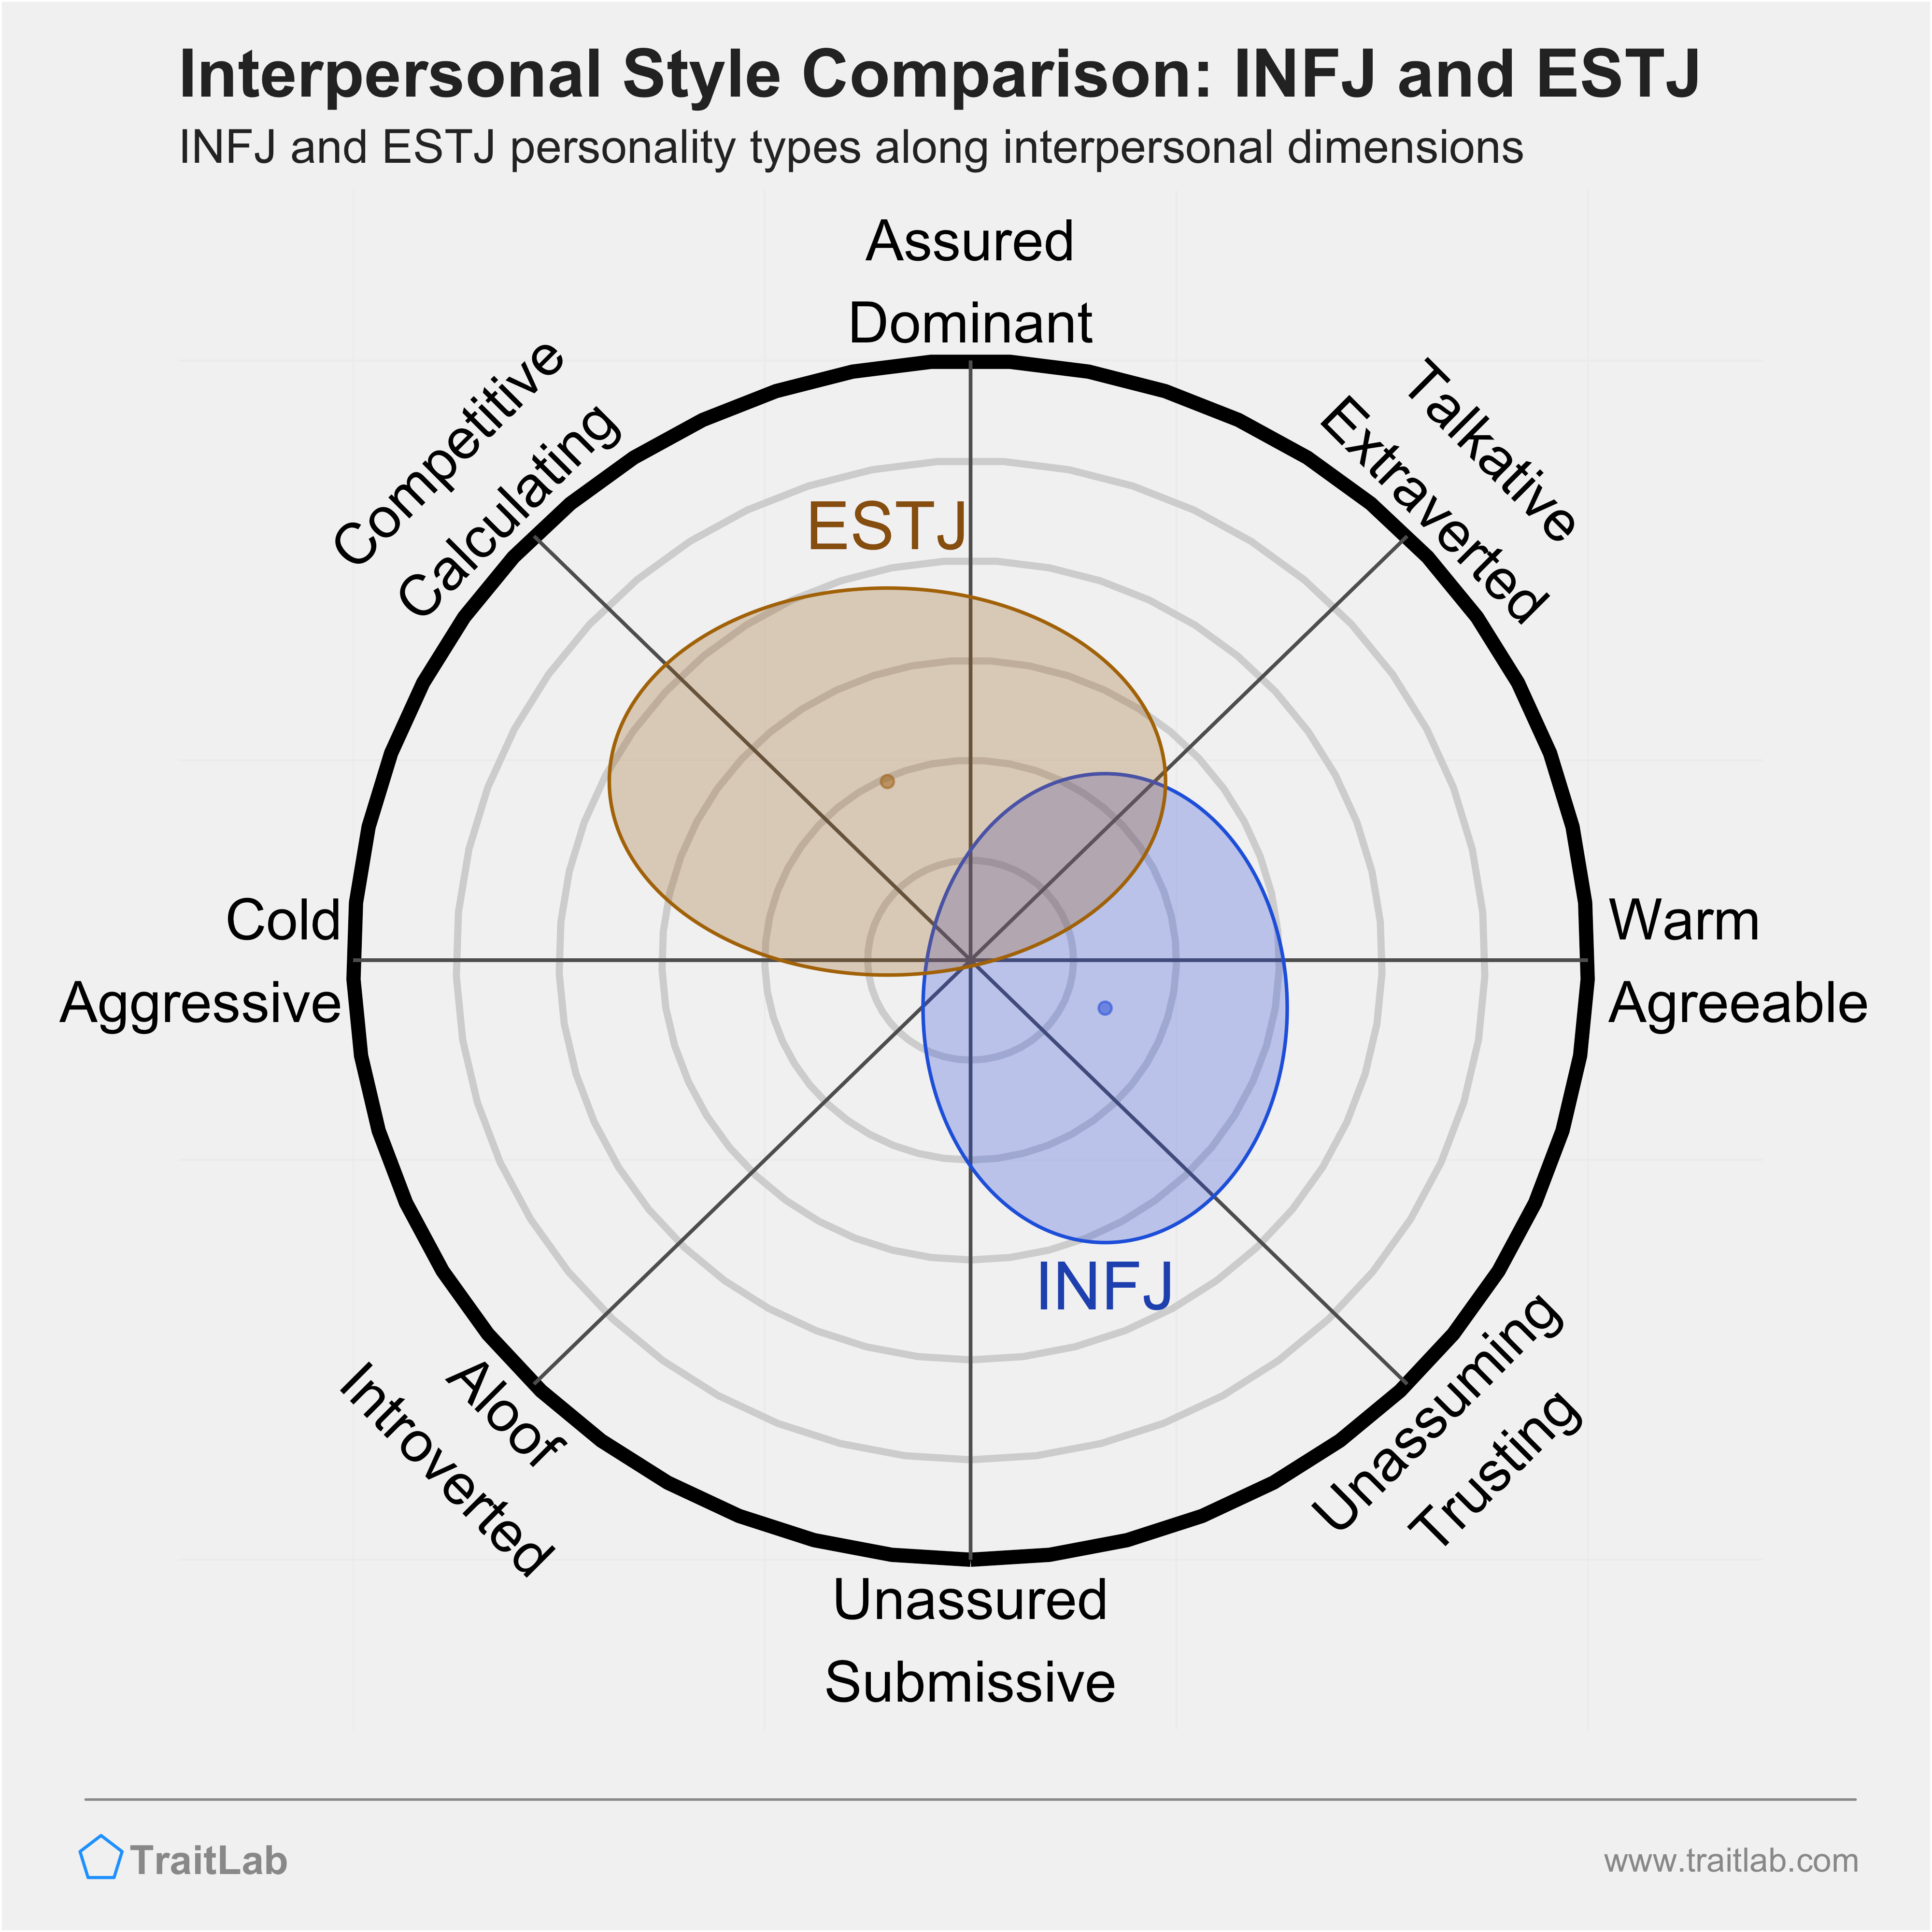 INFJ and ESTJ comparison across interpersonal dimensions